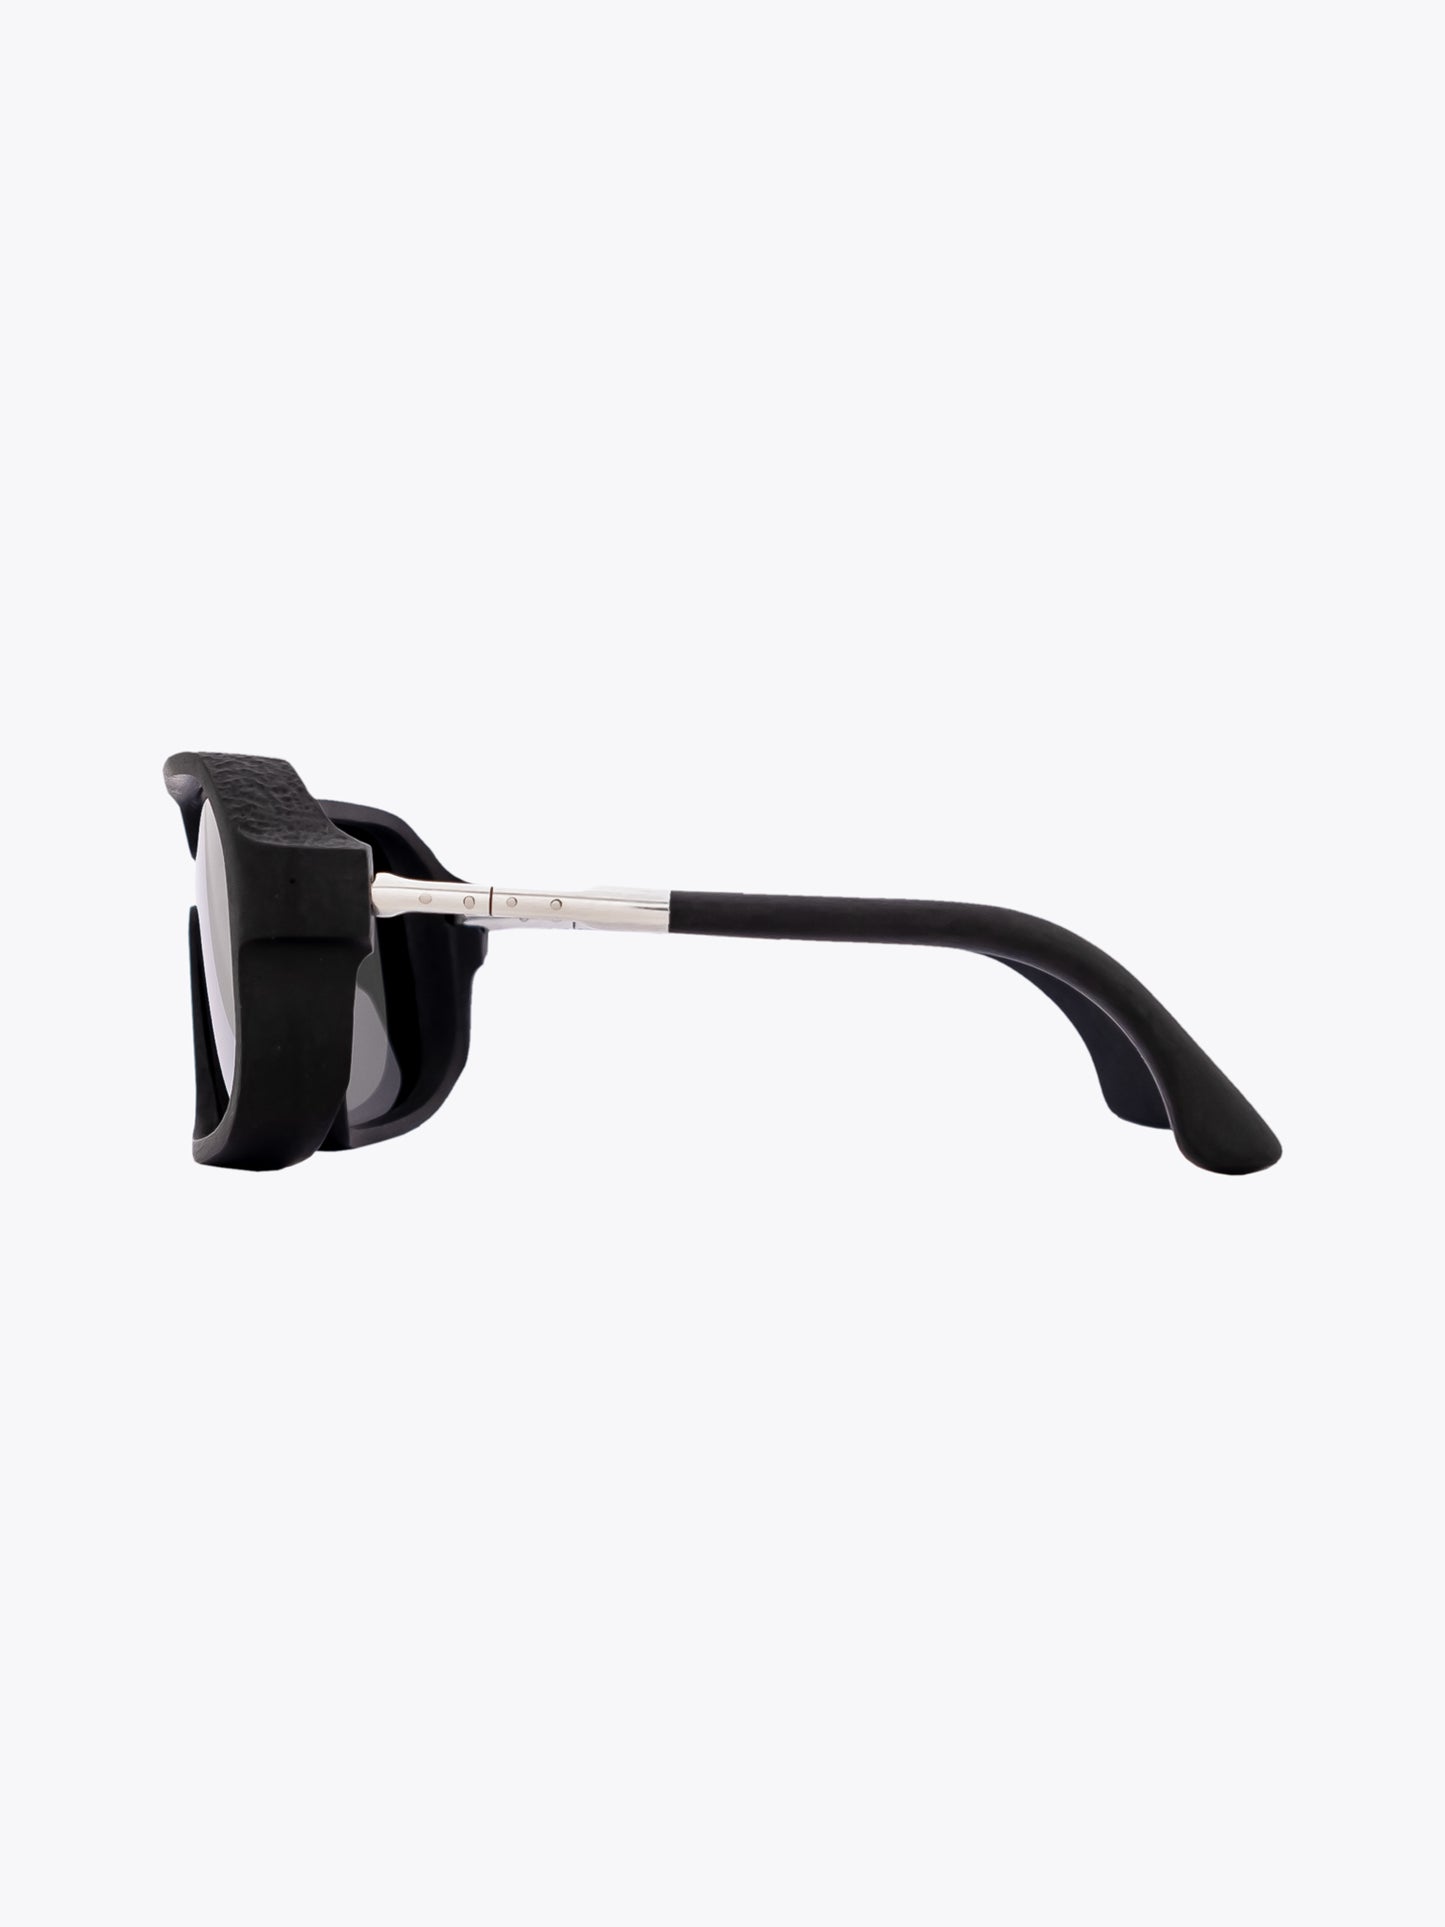 IMPURI Super Recycled Carbon Sunglasses Black - APODEP.com